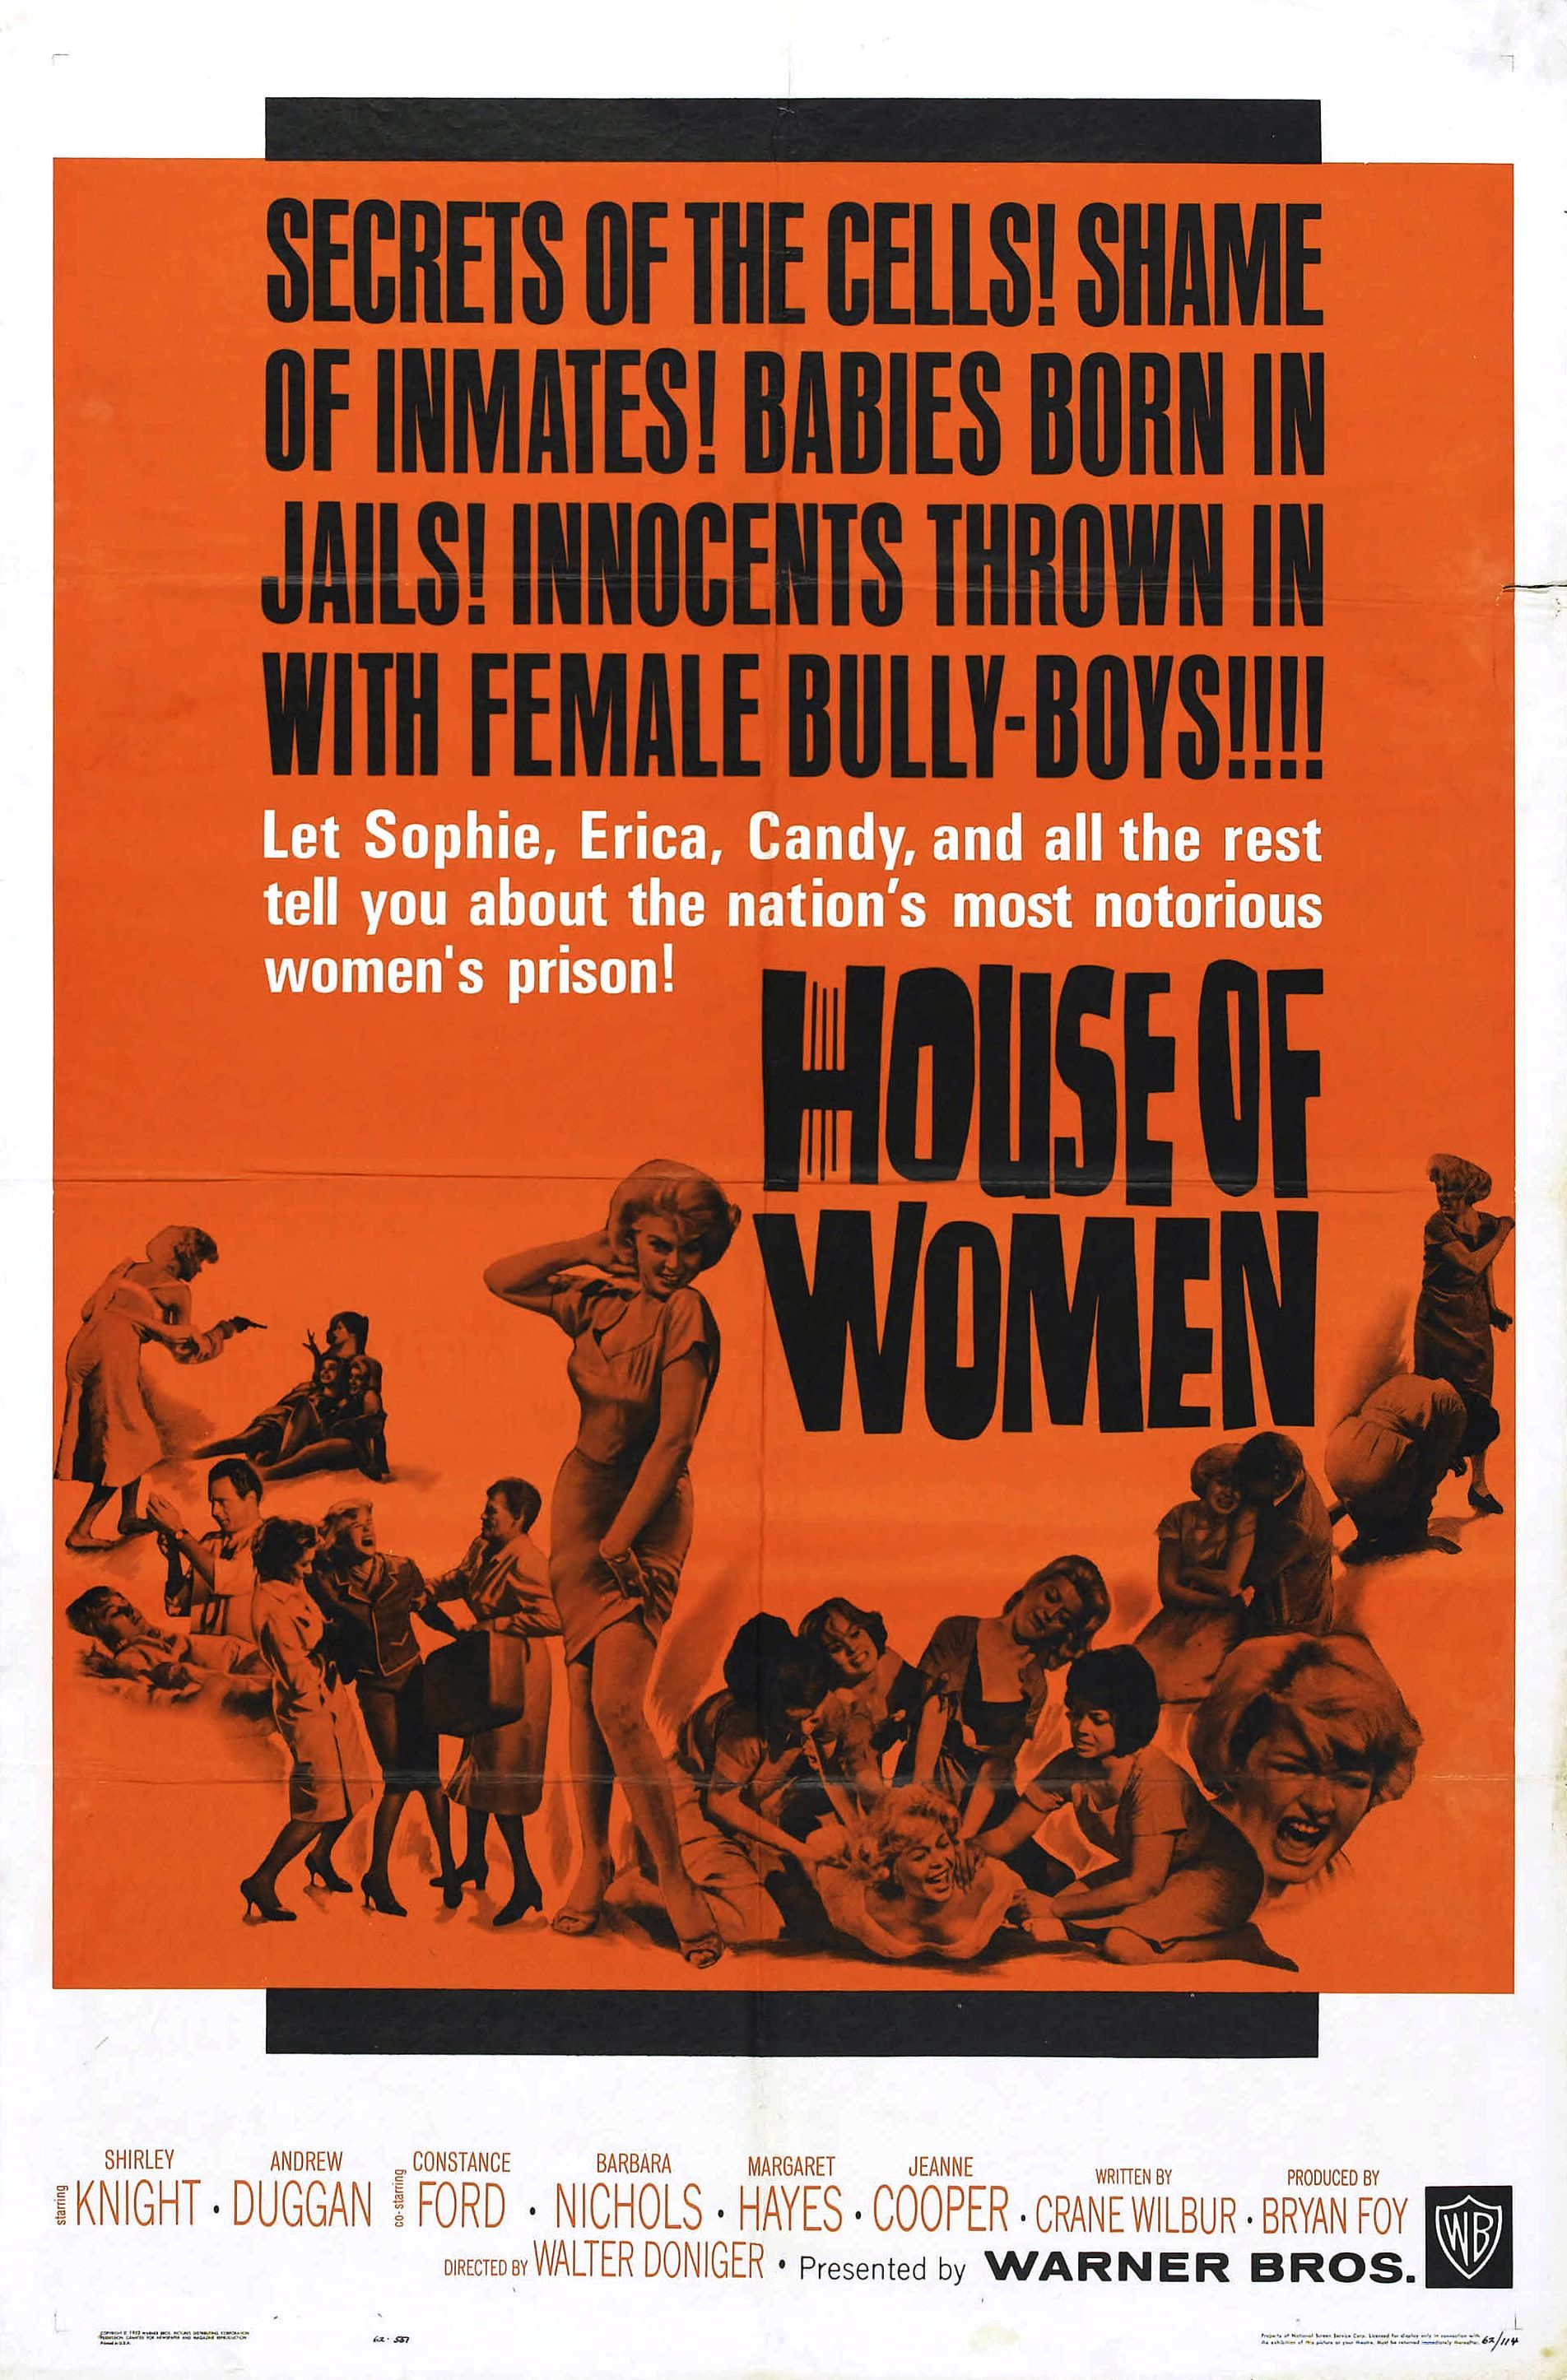 House of Women (1962)